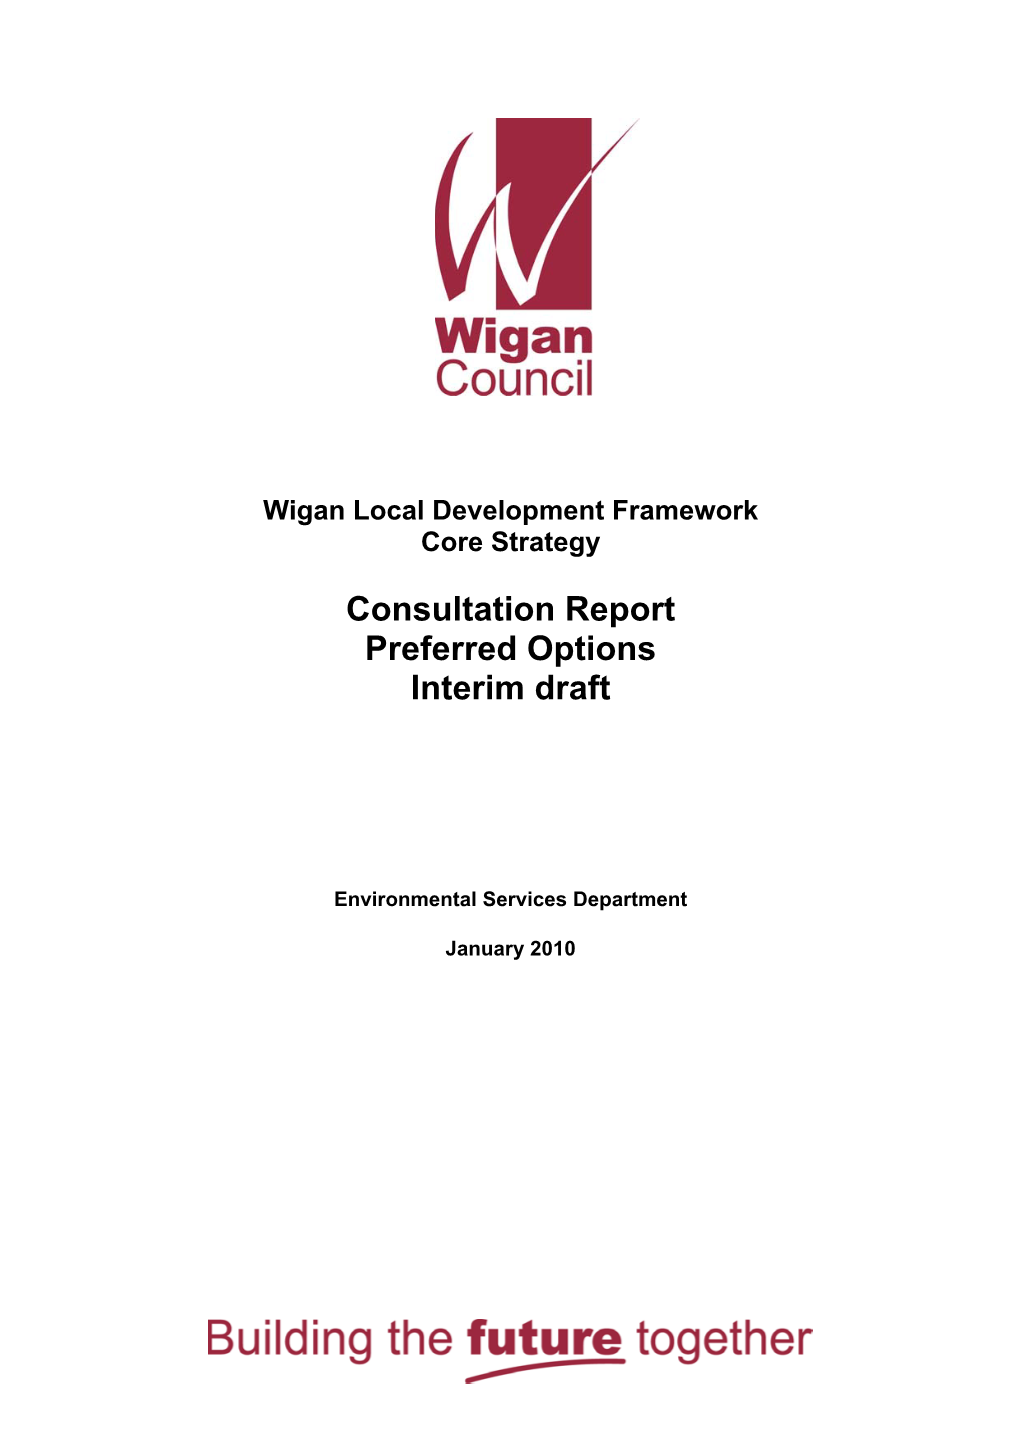 Consultation Report Preferred Options Interim Draft